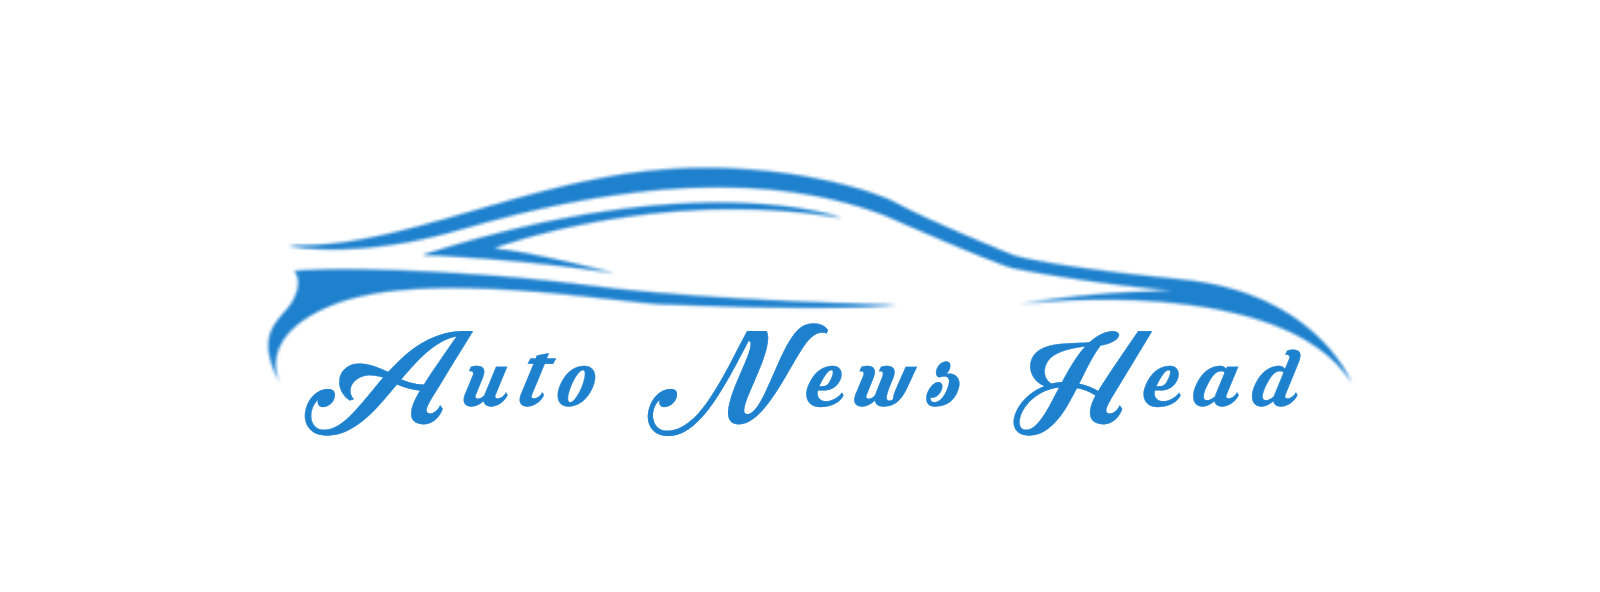 Auto News Head